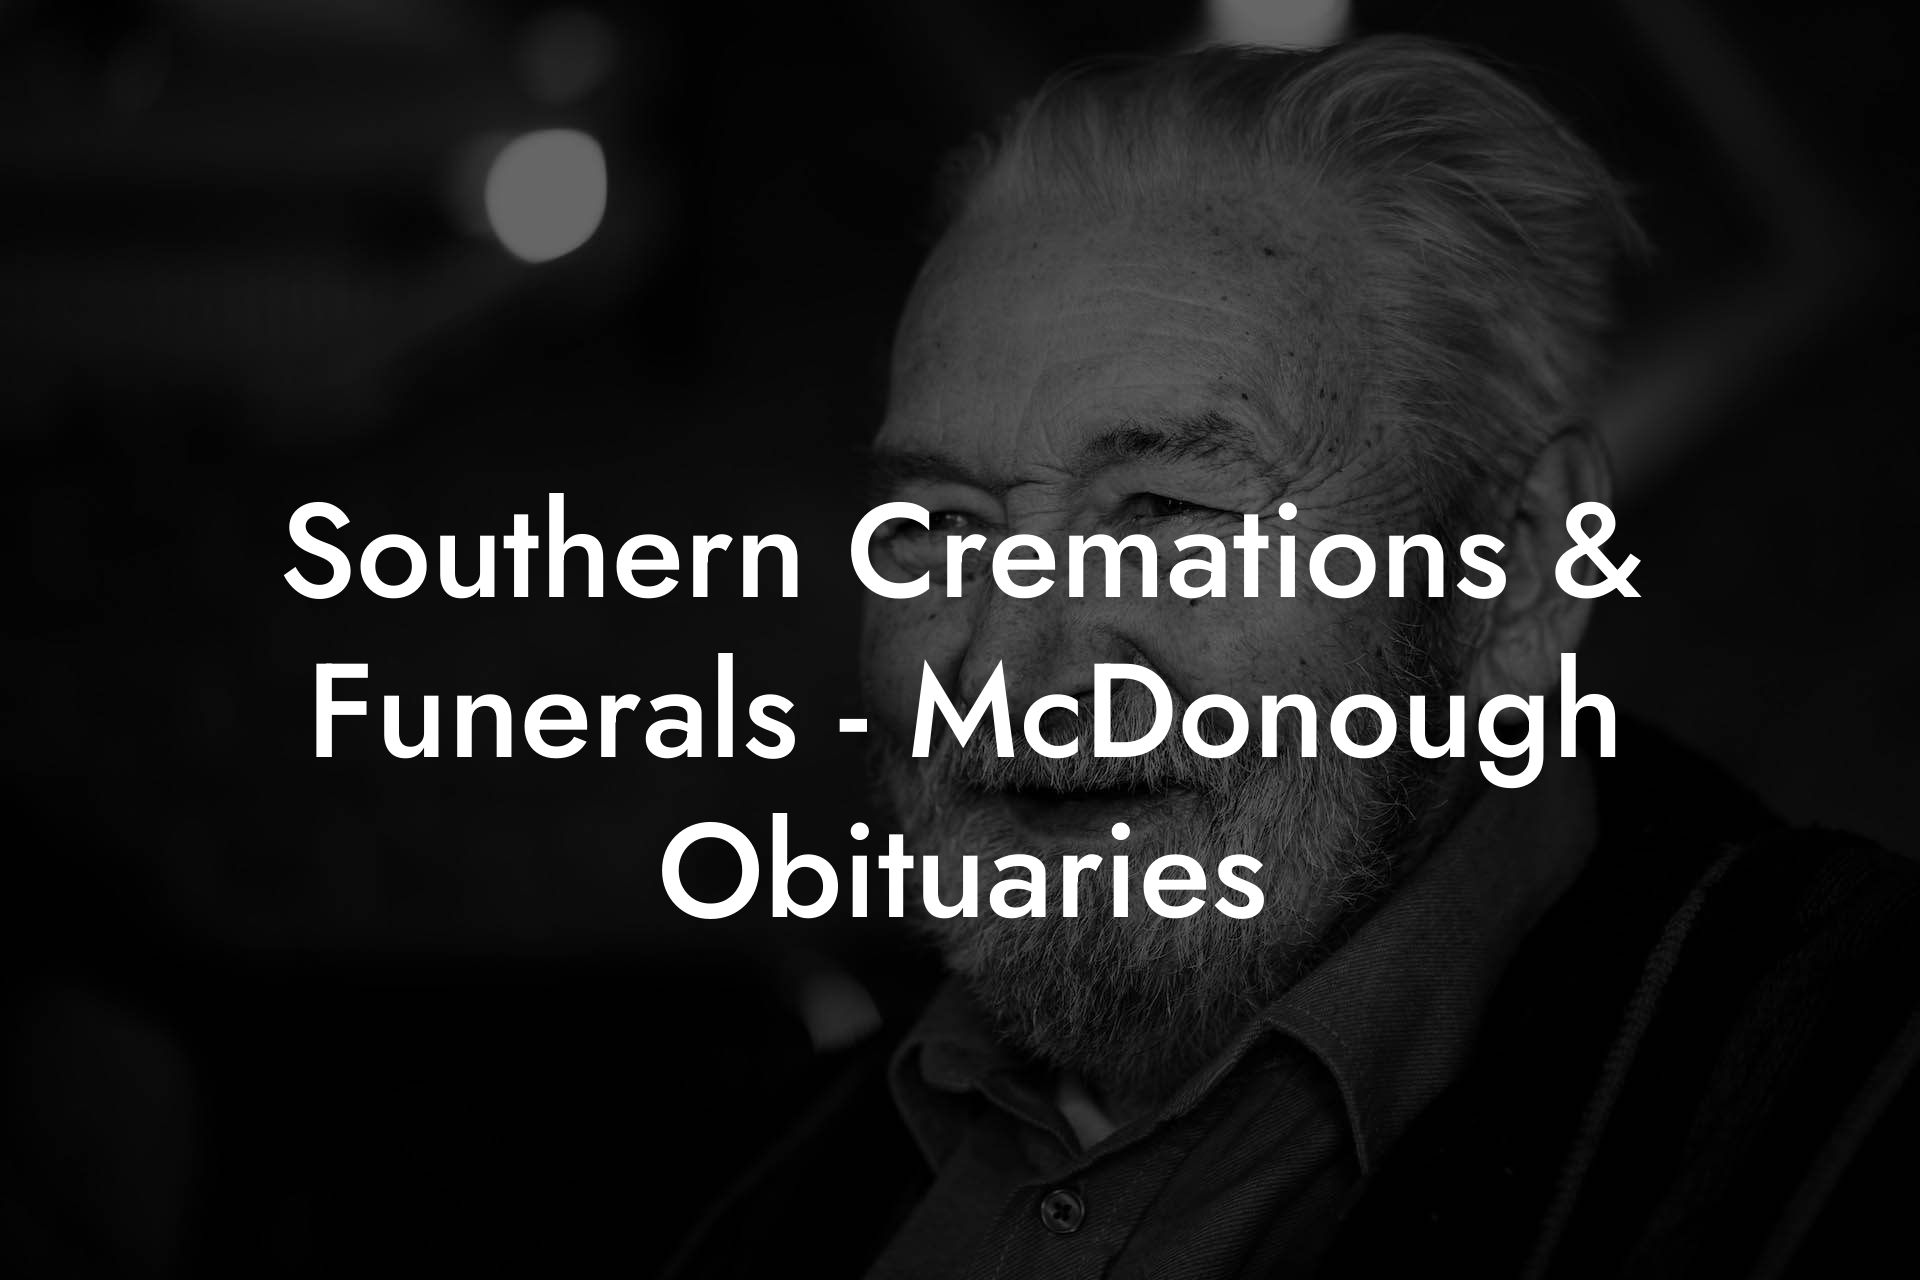 Southern Cremations & Funerals - McDonough Obituaries